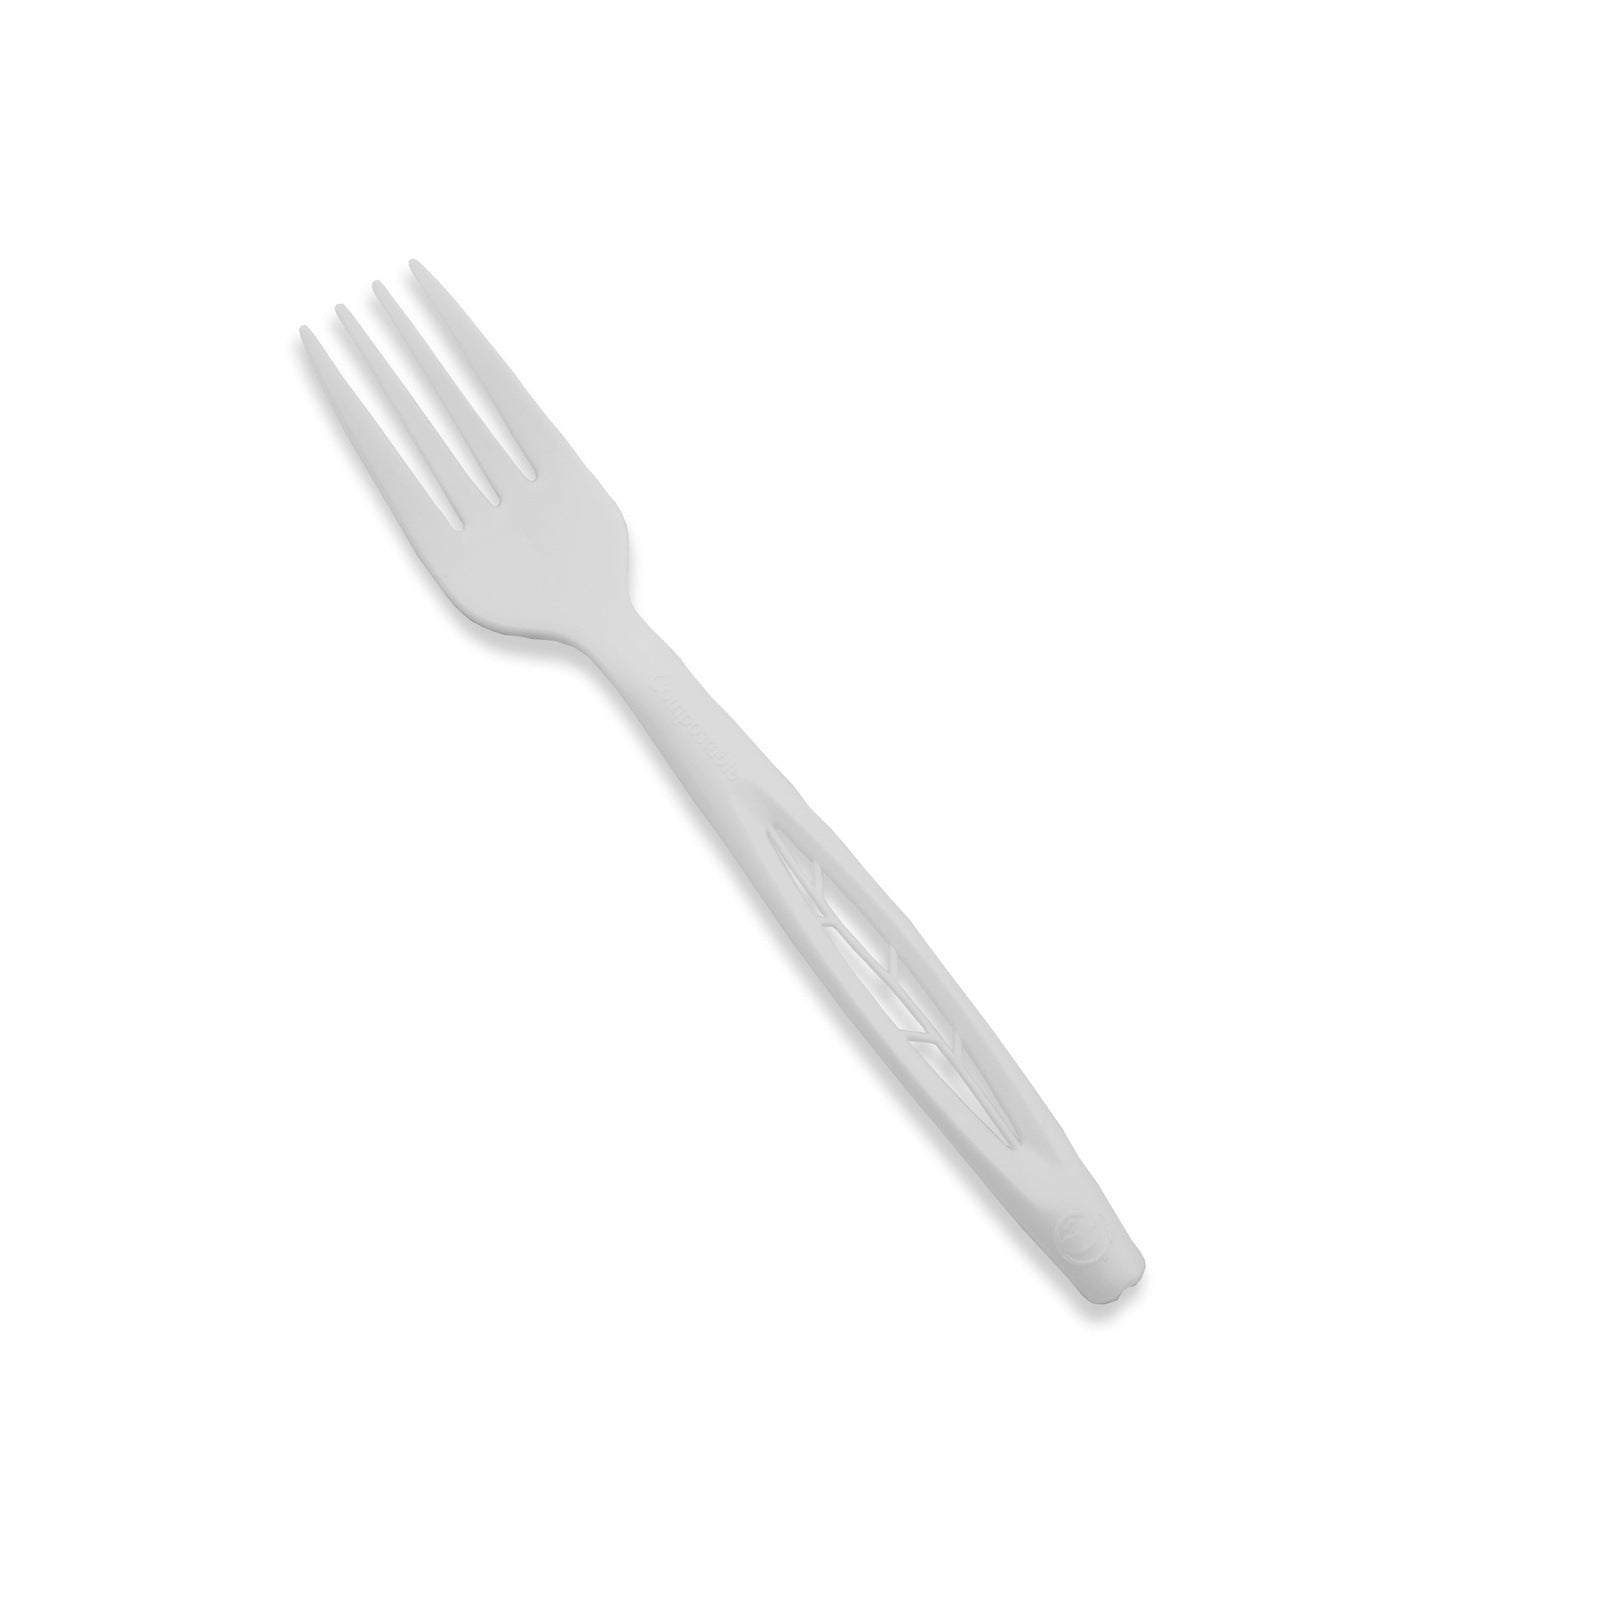 6.5" Heavy Duty Cutlery, Fork, White, 1000-Count Case